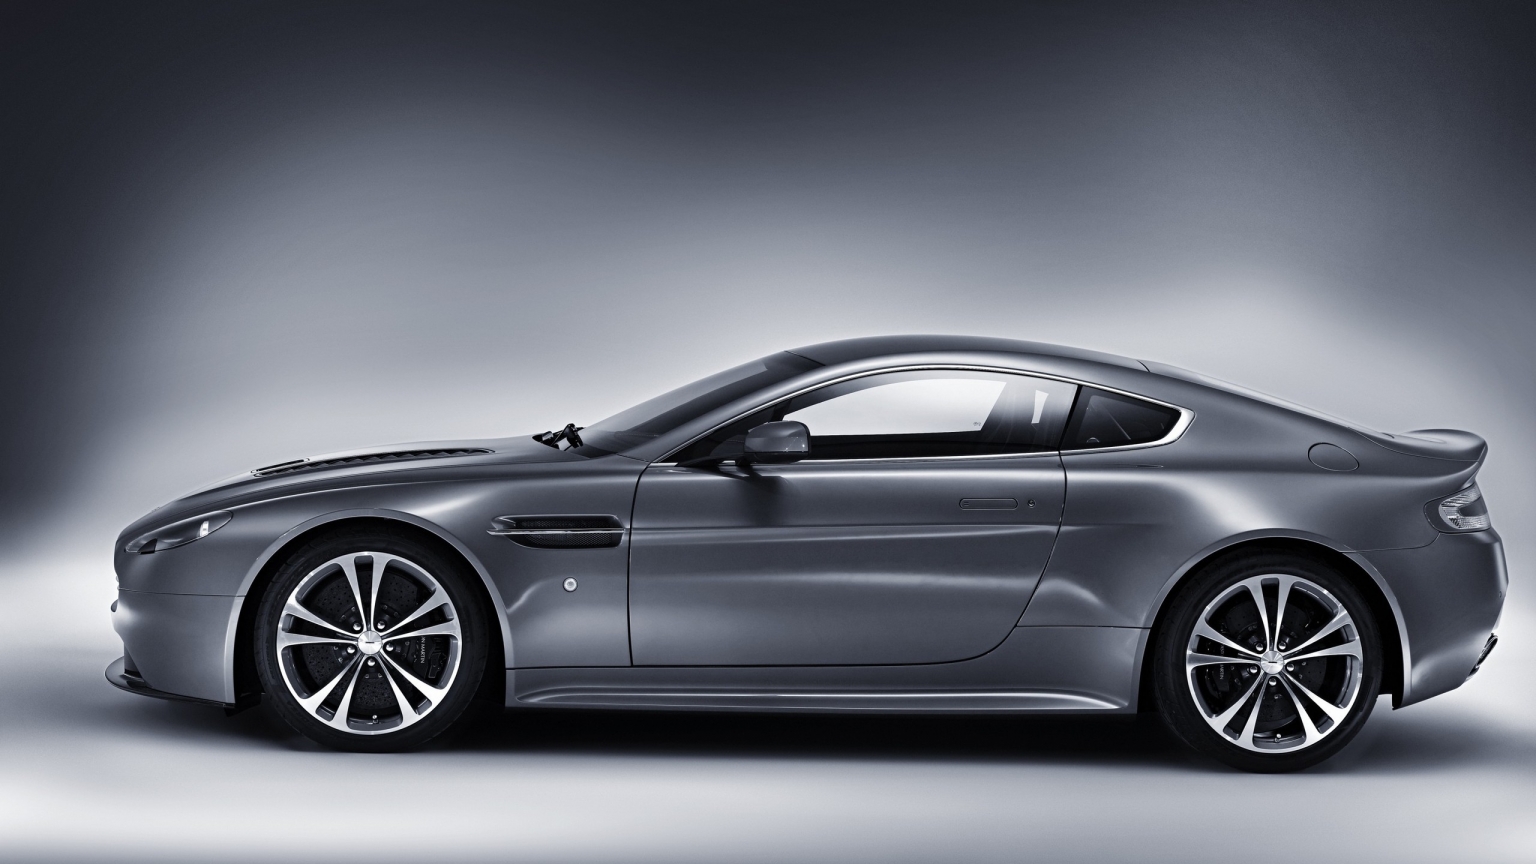 Aston Martin V12 Vantage Front View for 1536 x 864 HDTV resolution